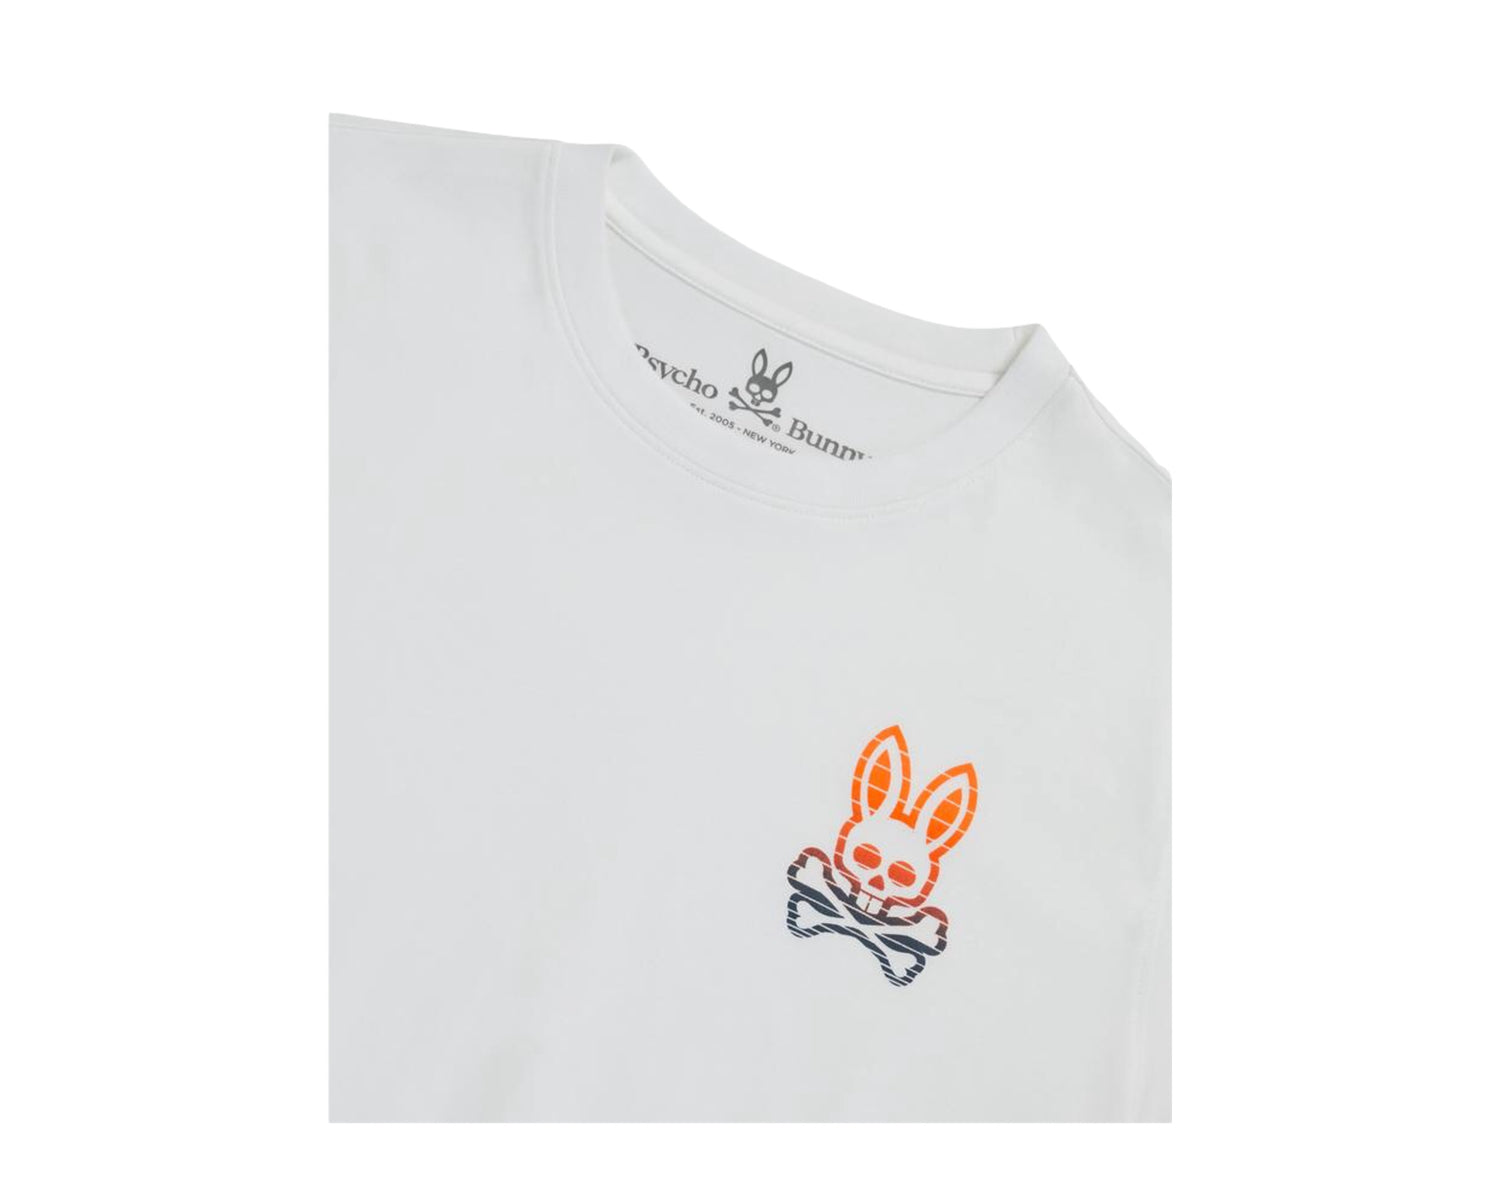 Psycho Bunny Egremont Graphic Men's Long Sleeve Tee Shirt